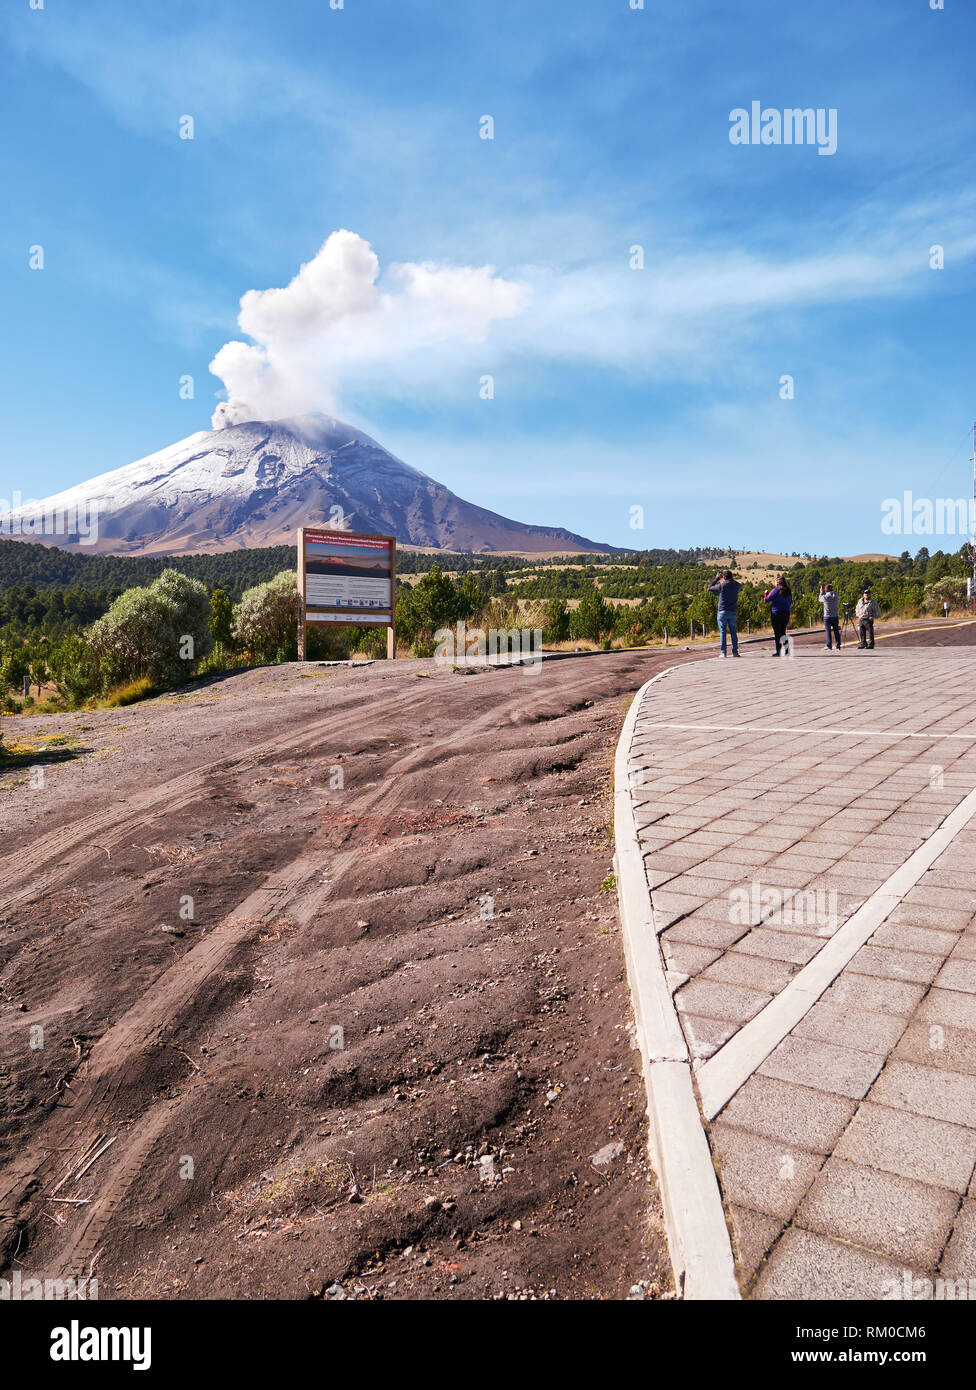 Platz mit Touristen von Paso de Cortes in Izta-Popo Zoquiapan National Park und Blick auf den Vulkan Popocatepetl, Amecameca, Mexiko, im September 30, 2018 Stockfoto